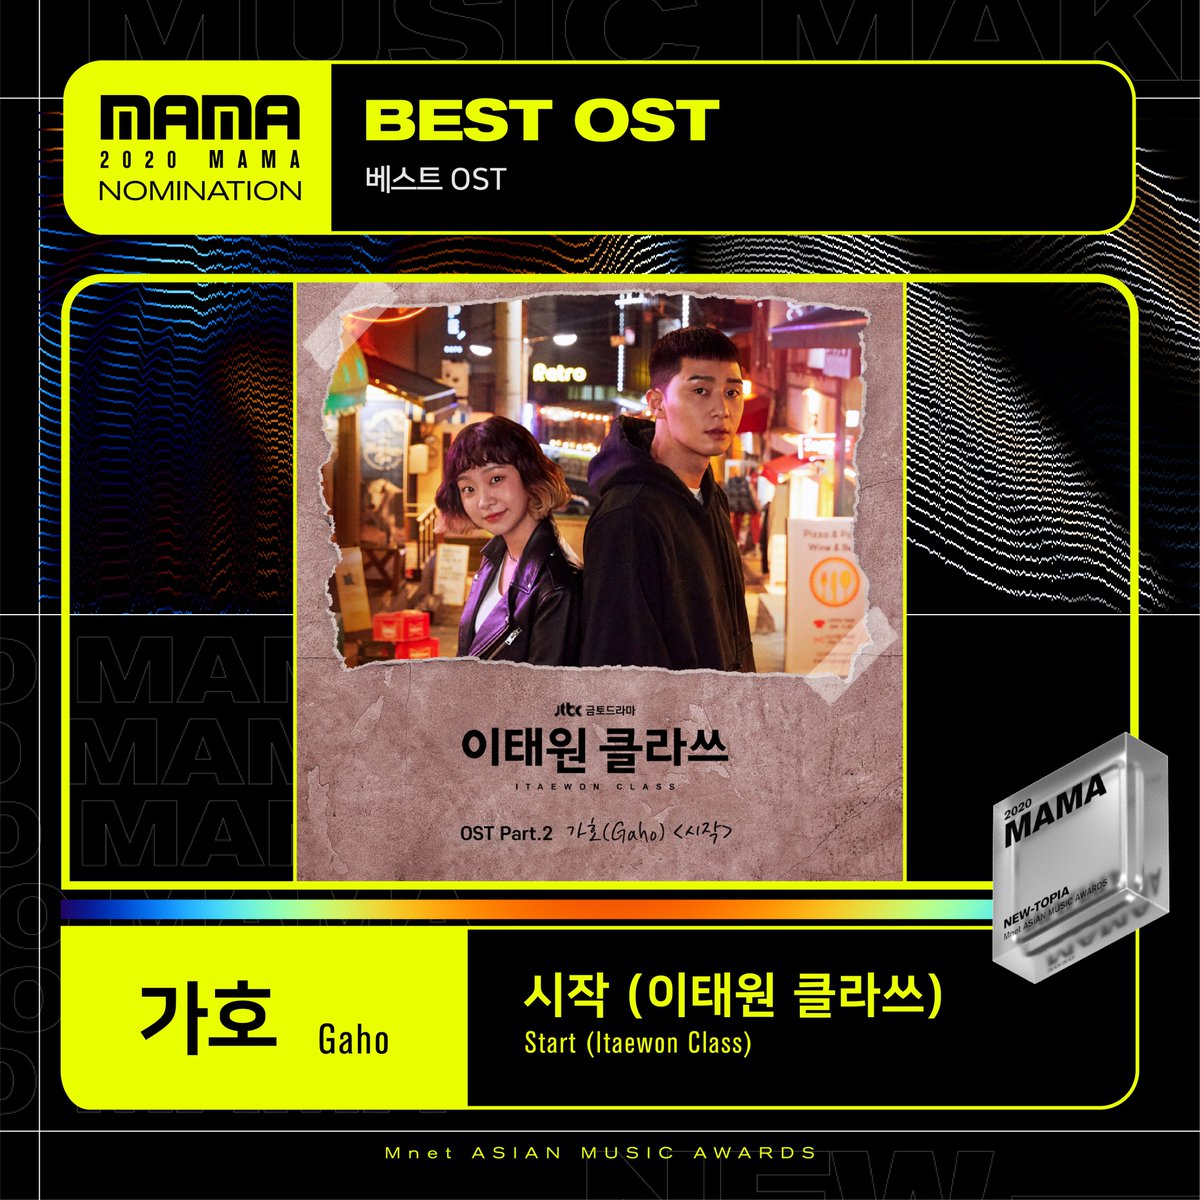 [#2020MAMA] Best OST Nominee l #gaho #가호 #Start #시작
 
Gate to NEW-TOPIA, 2020 MAMA
2020.12.06 (SUN)
 
#MnetASIANMUSICAWARDS #MAMA #Mnet